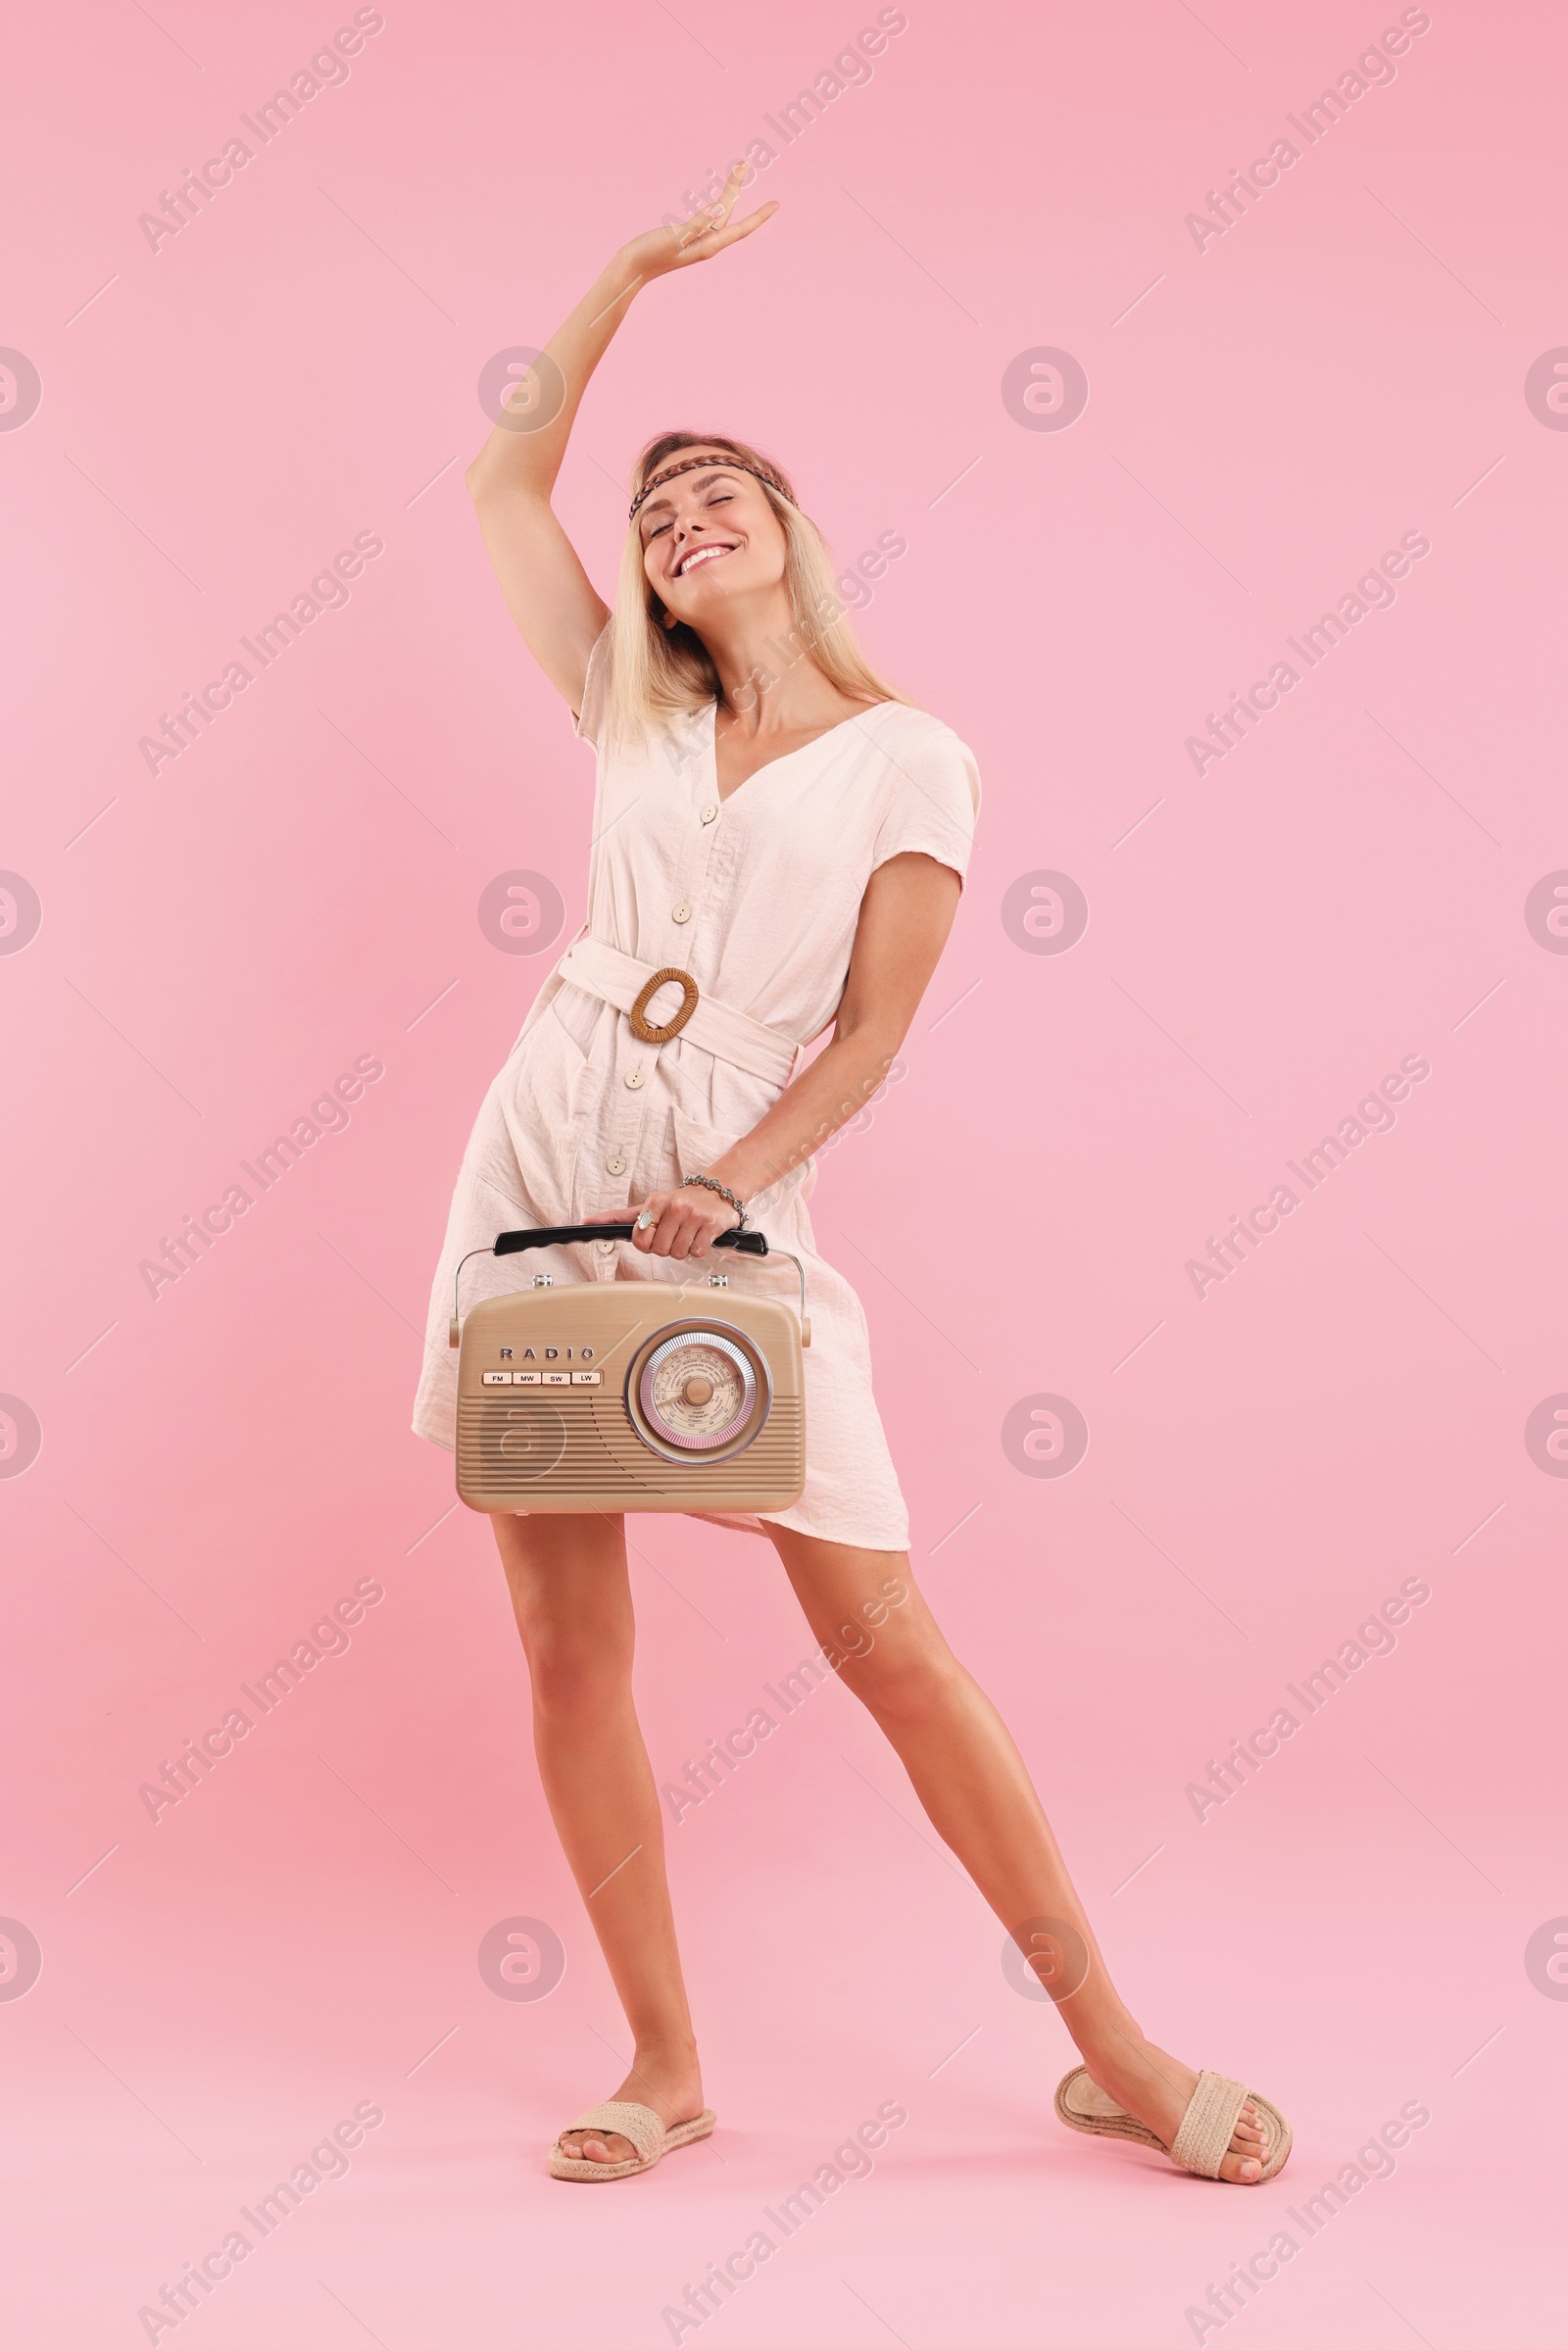 Photo of Happy hippie woman with retro radio receiver on pink background